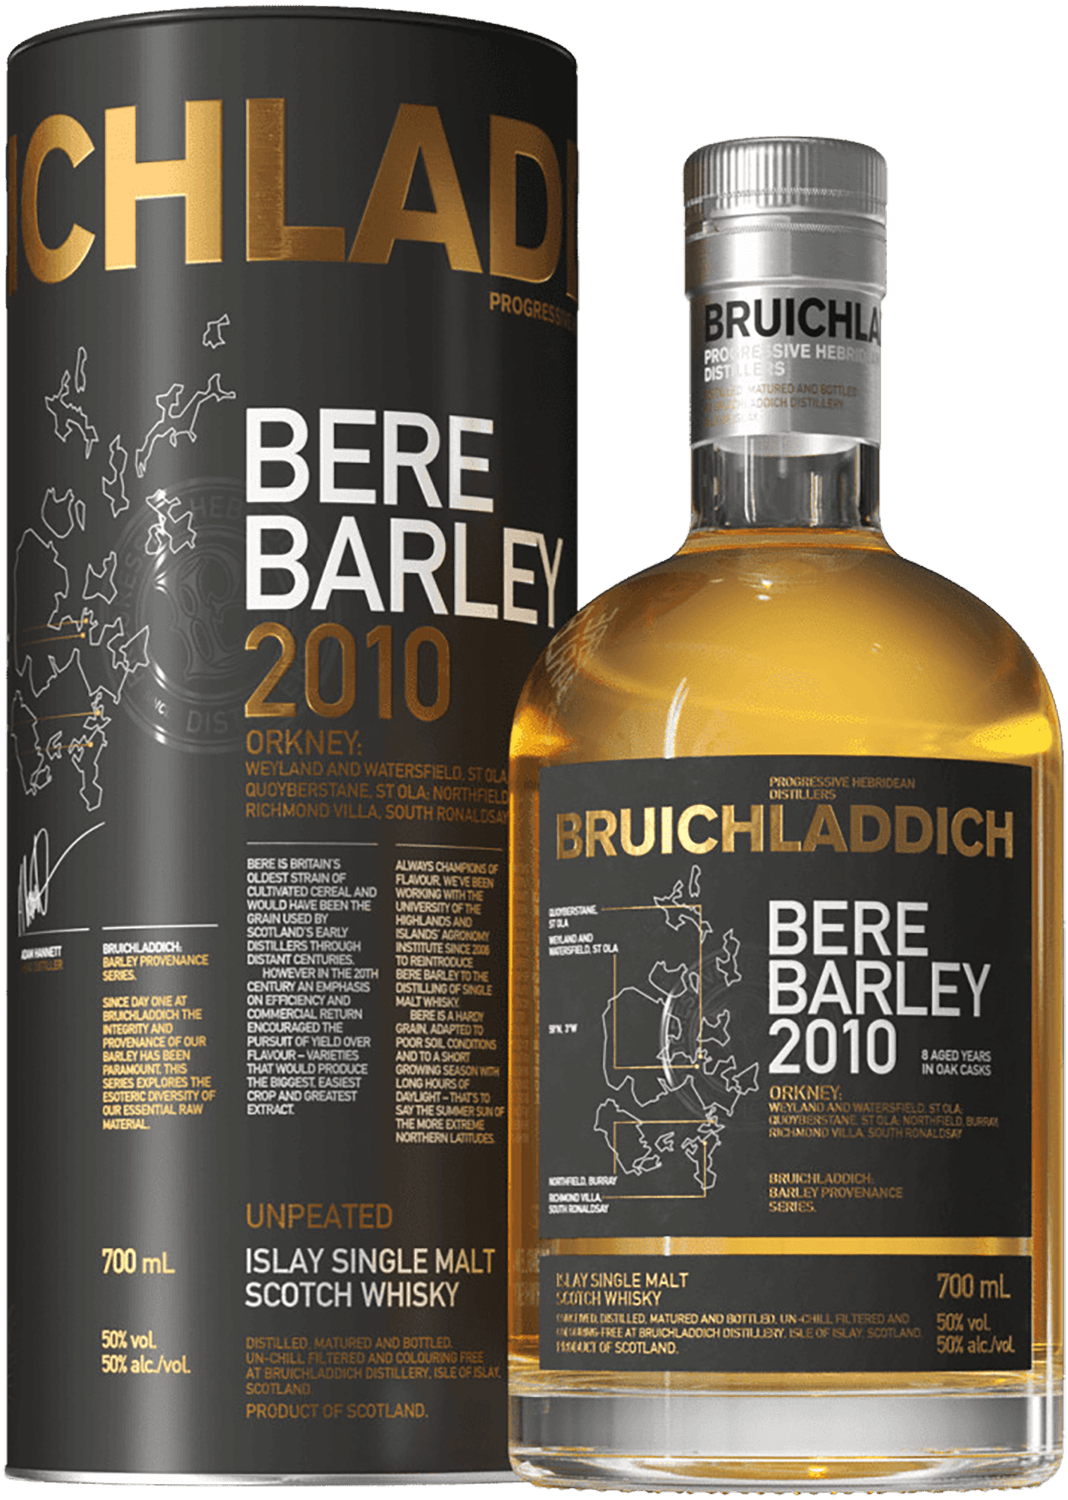 Bruichladdich Bere Barley Islay single malt scotch whisky (gift box) laphroaig select islay single malt scotch whisky gift box